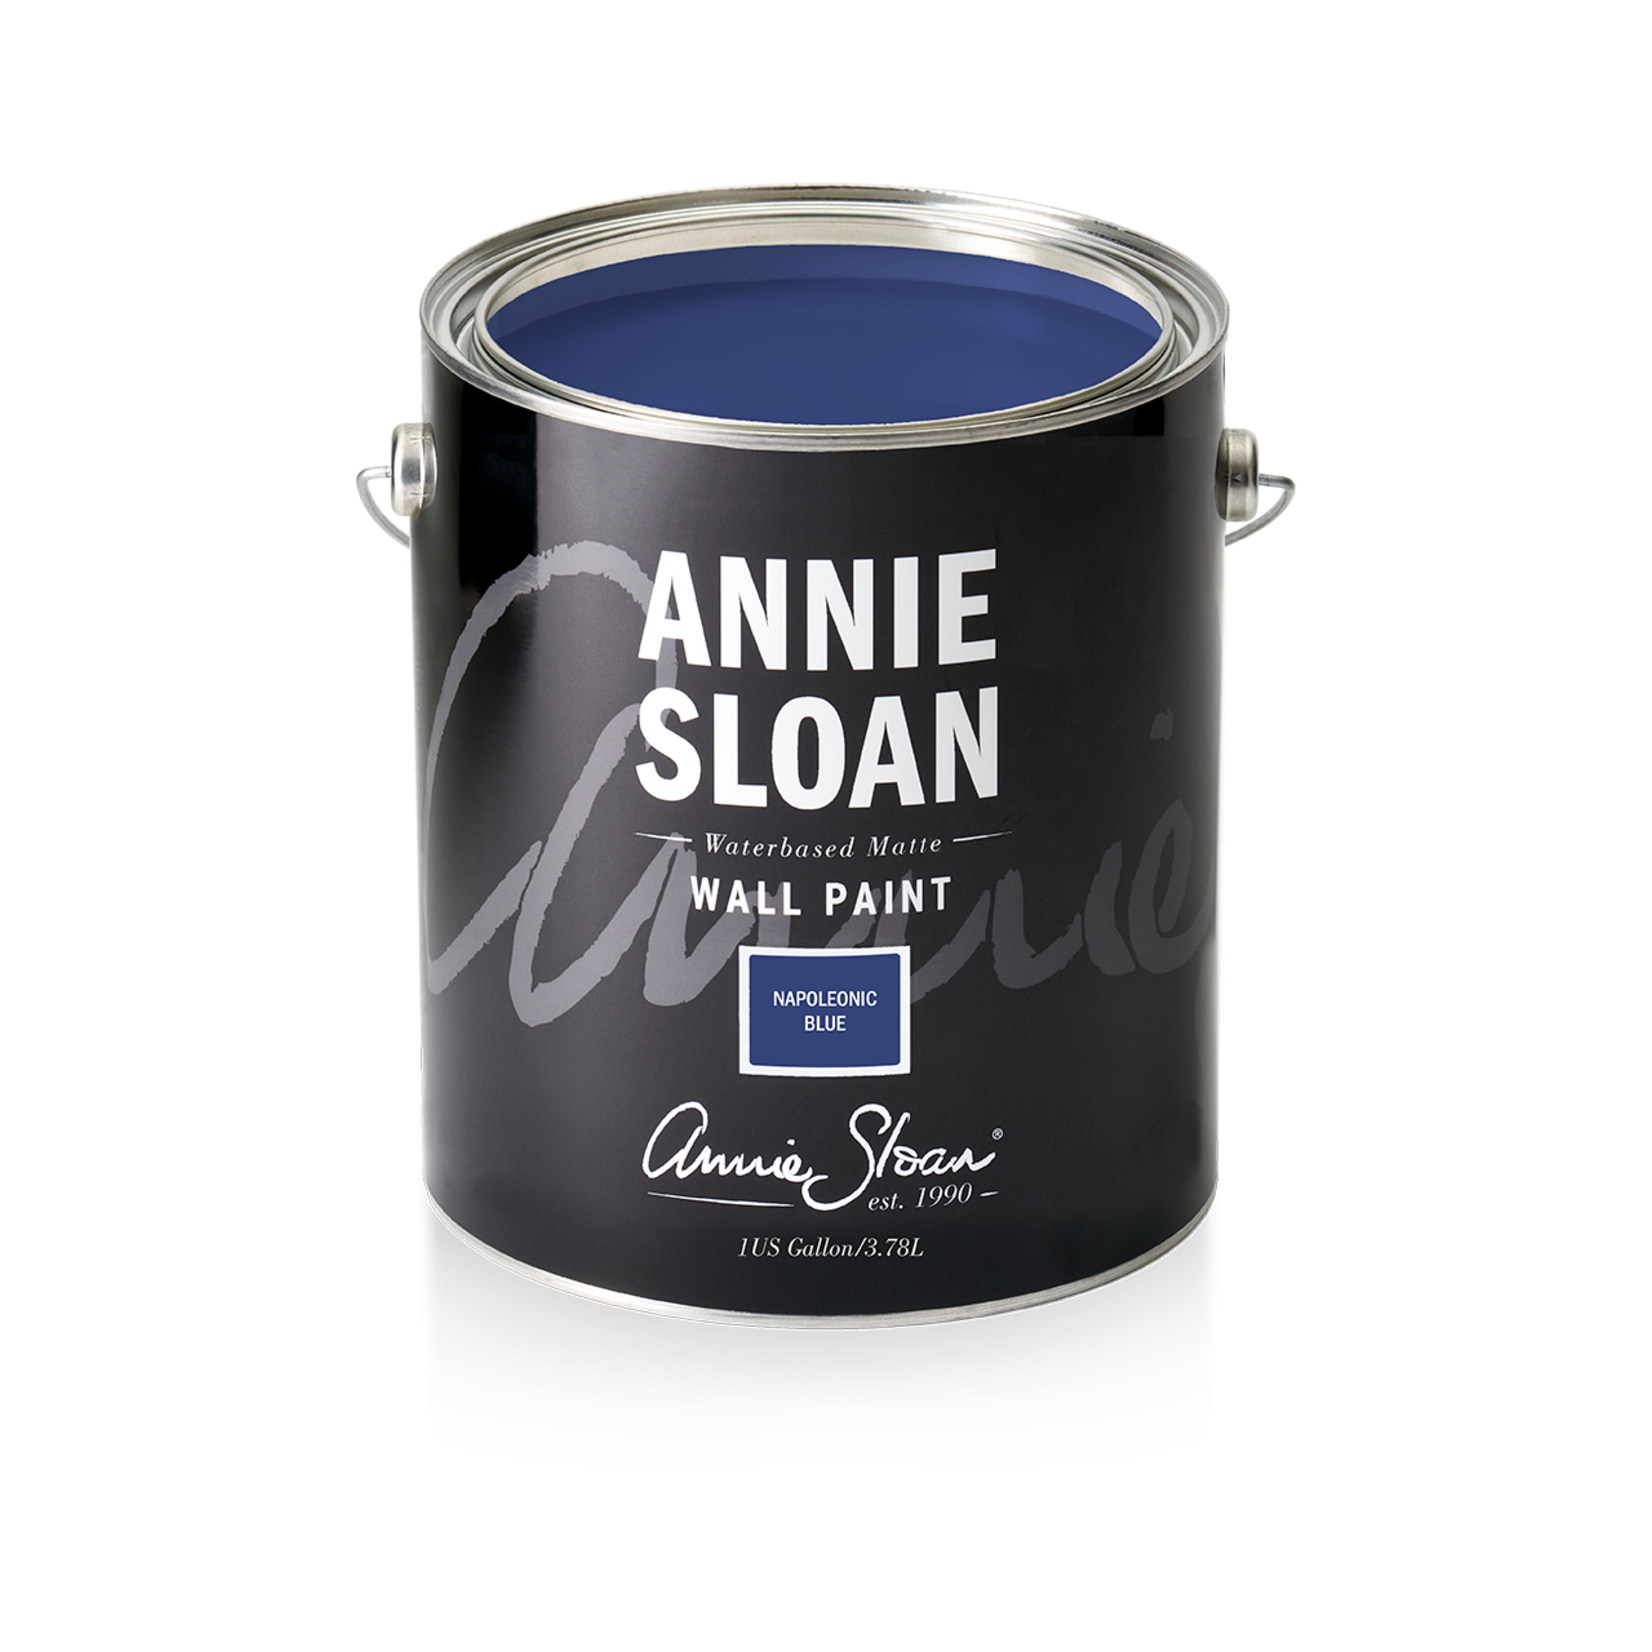 Annie Sloan Wall Paint 1 Gallon Napoleonic Blue